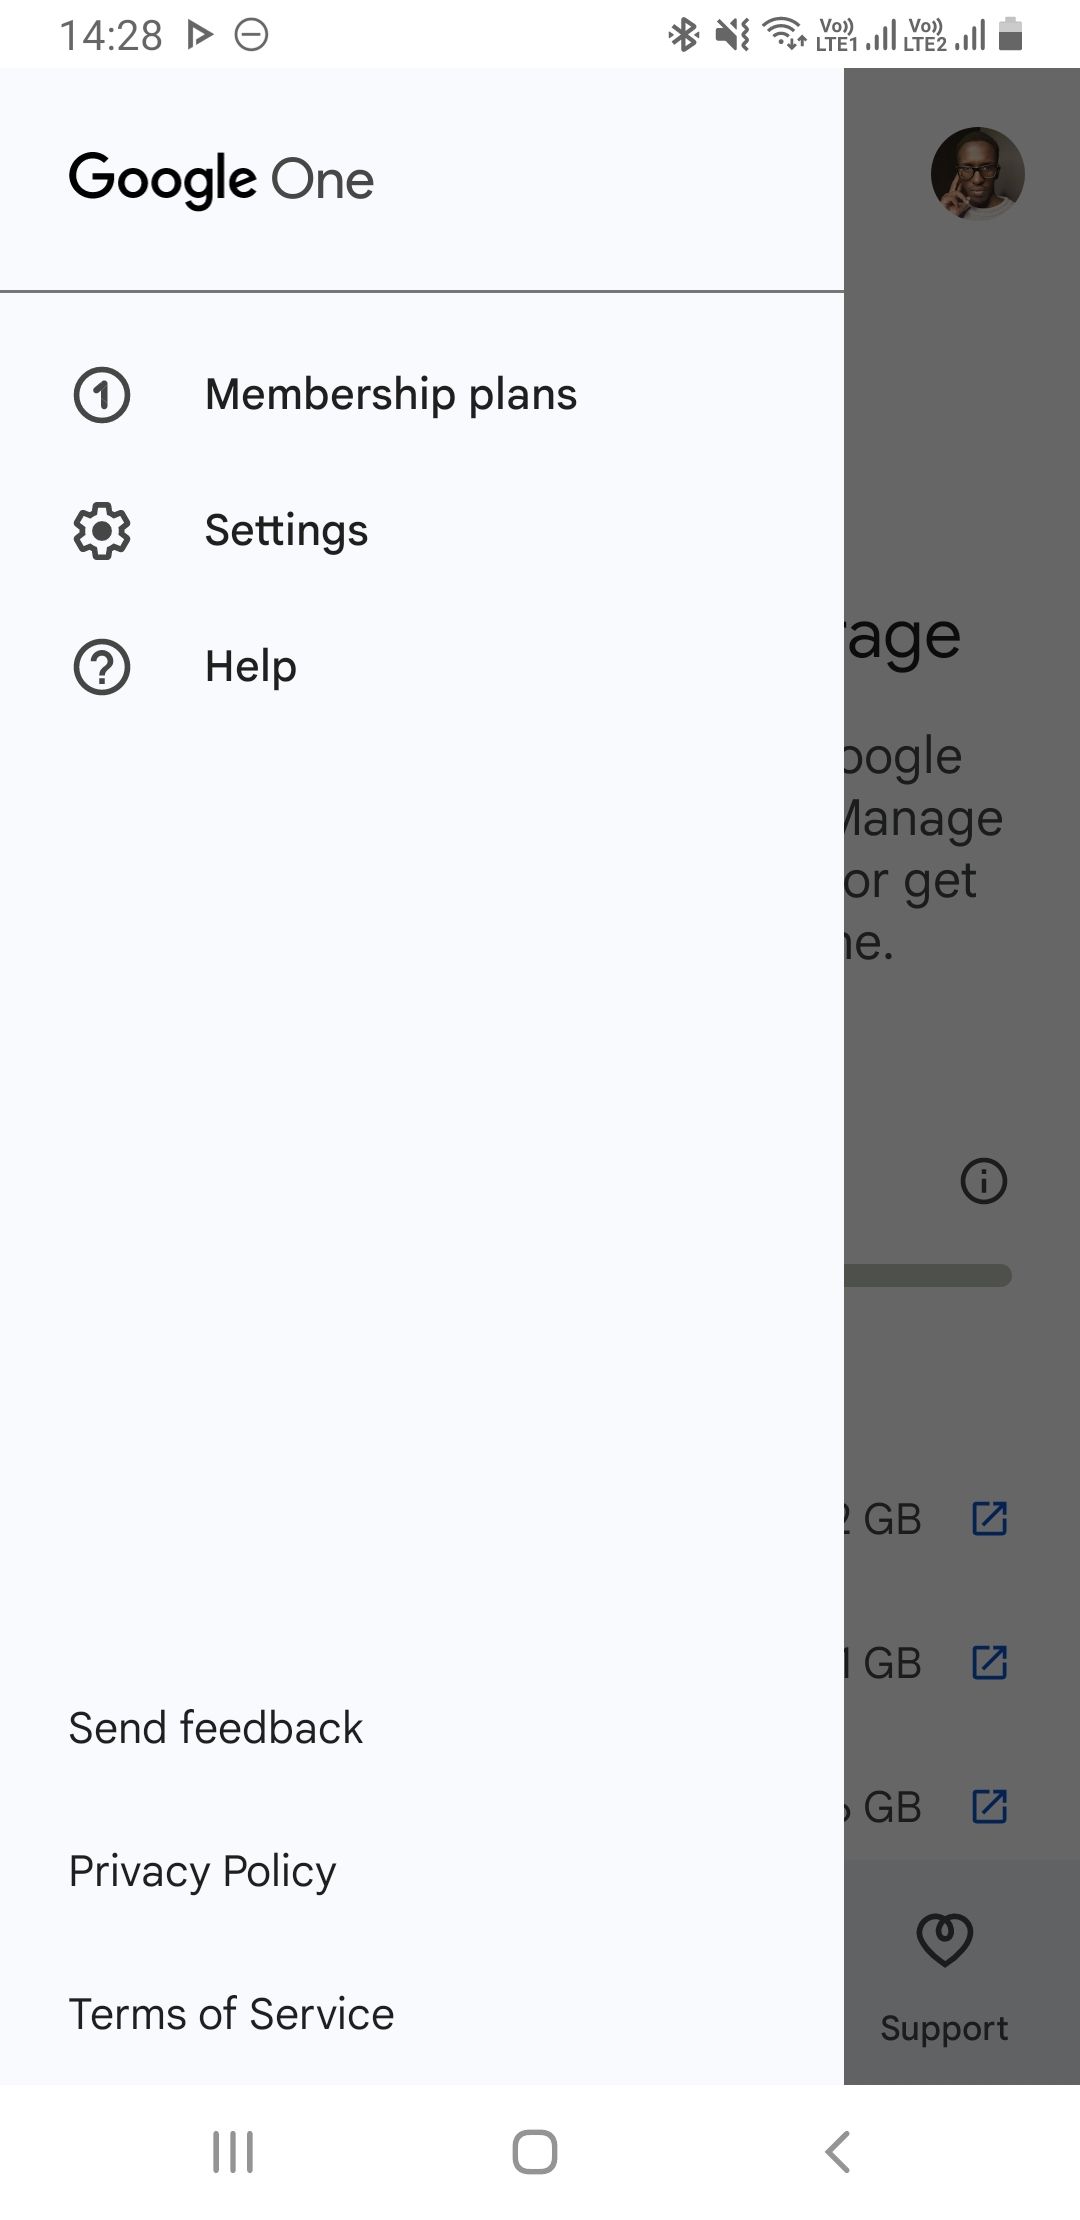 Google One app menu